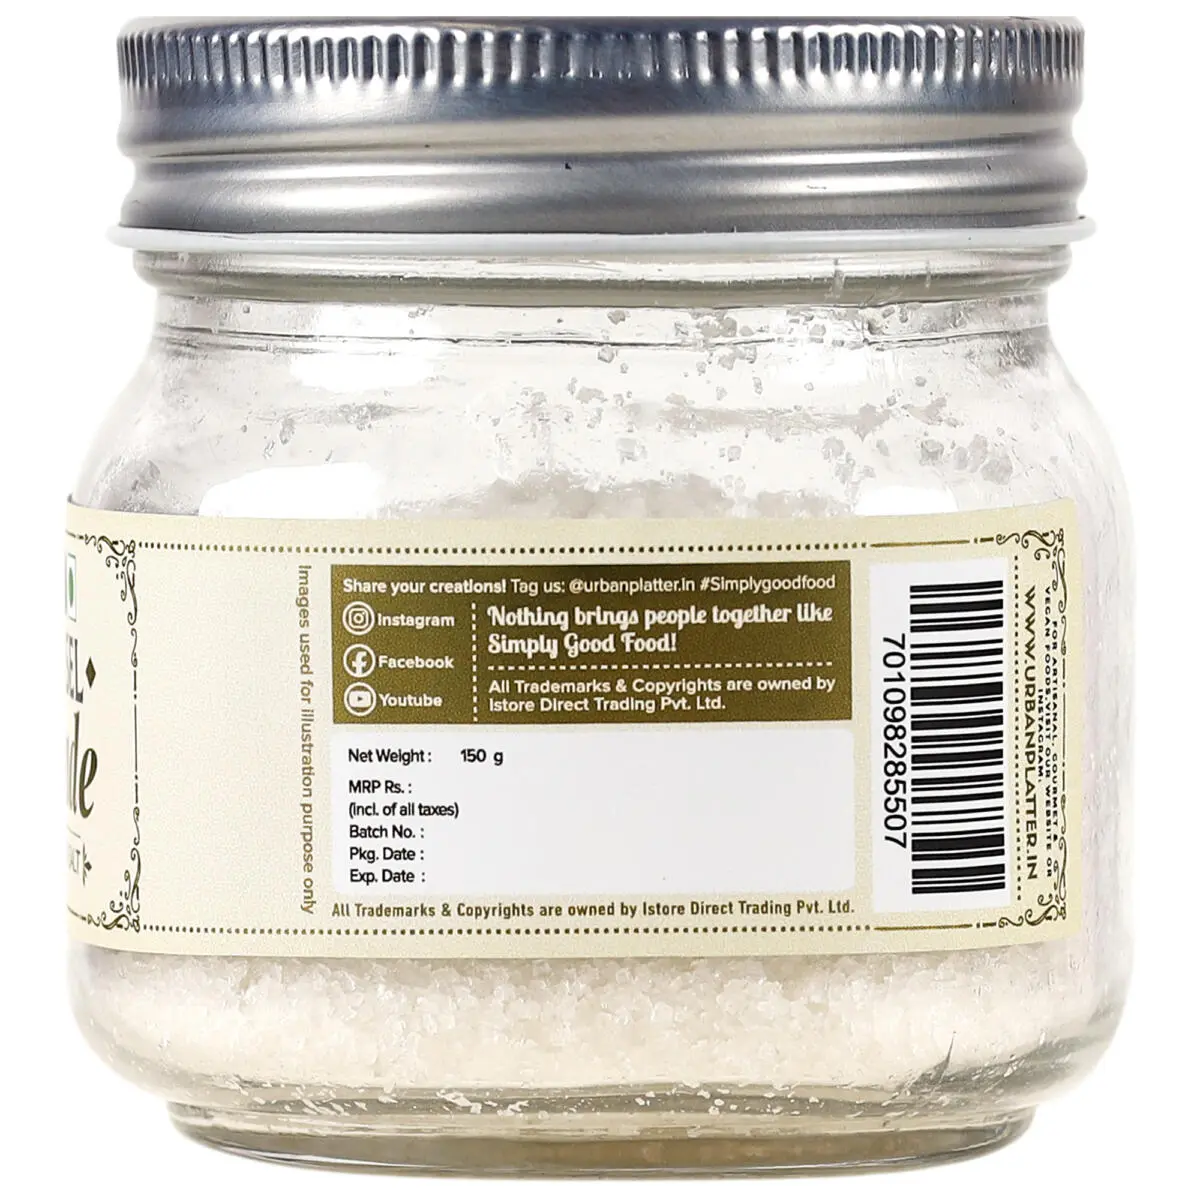 Fleur De Sel French Salt – Texas Salt Co